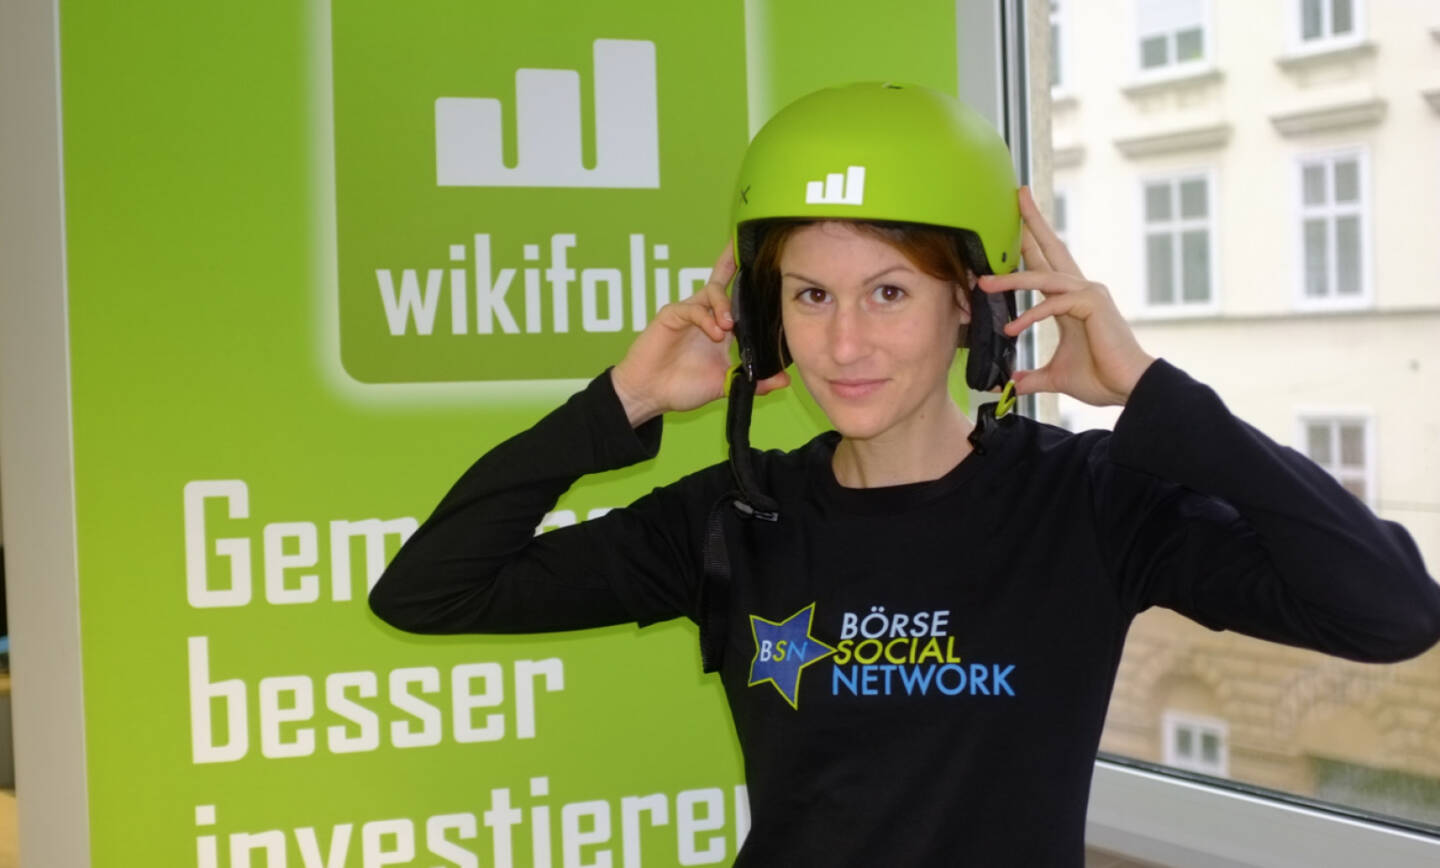 Christina Öhler, wikifolio, im Börse Social Network-Shirt